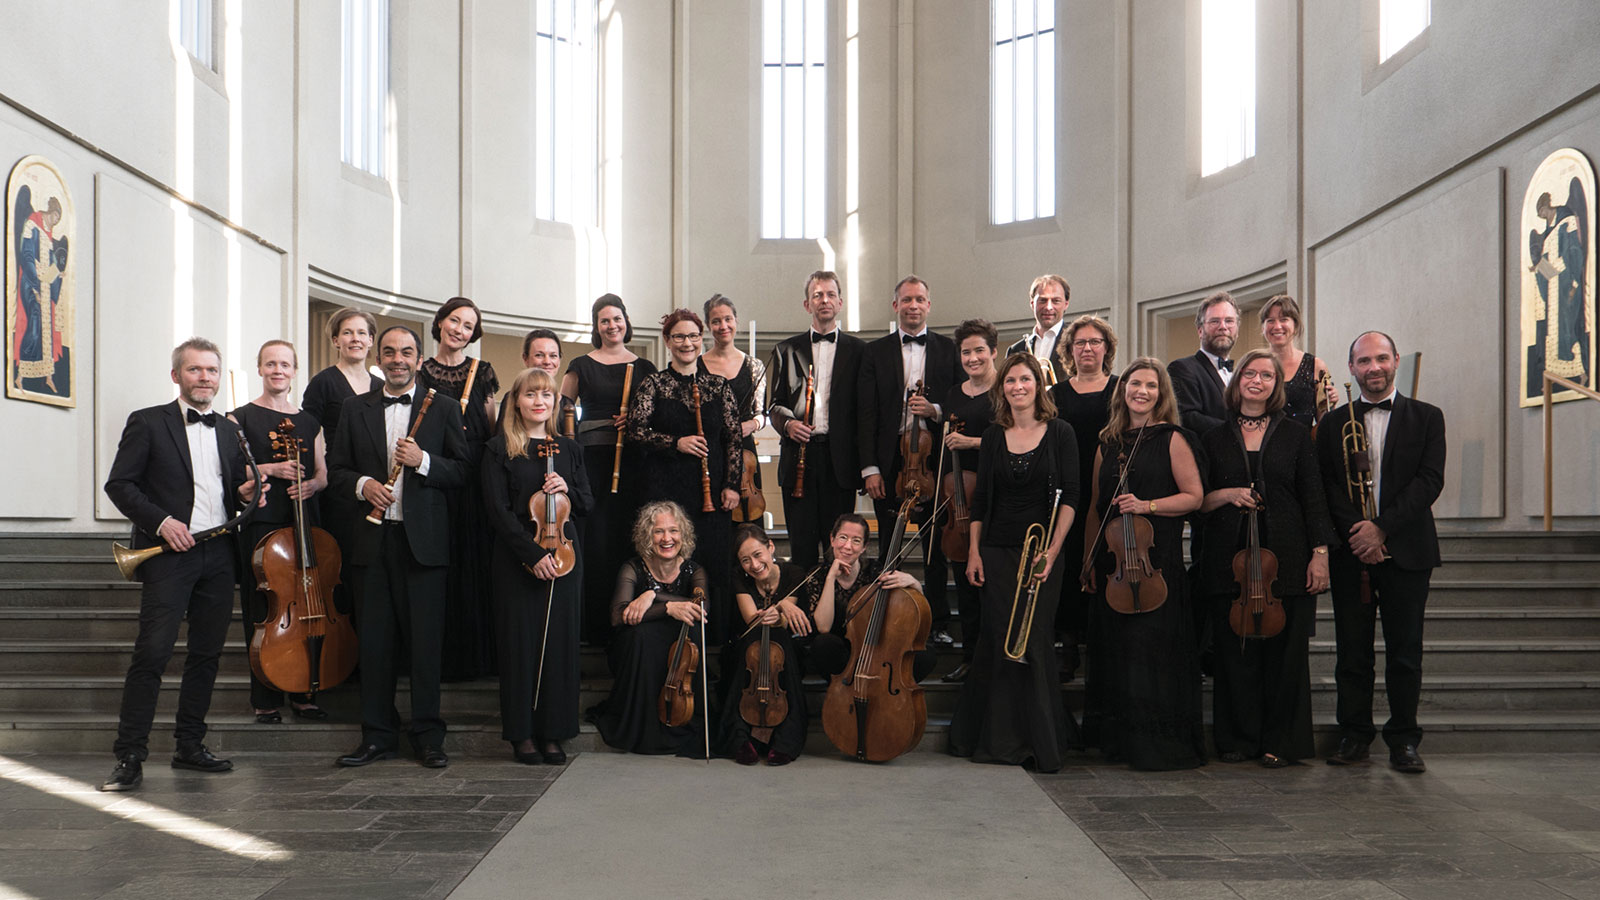 The Reykjavik International Baroque Orchestra